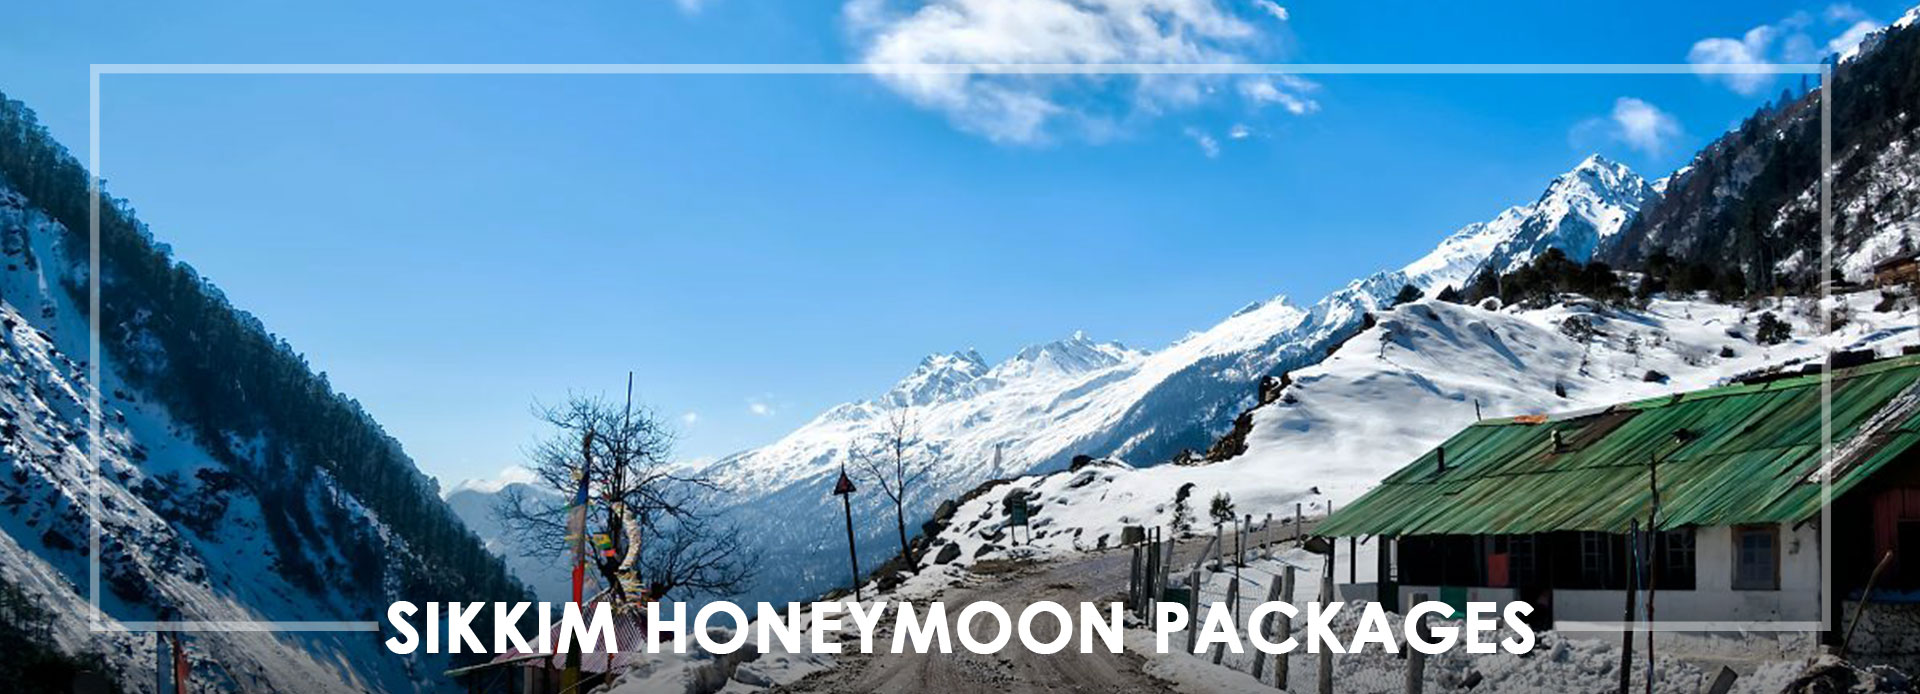  Sikkim Honeymoon Packages